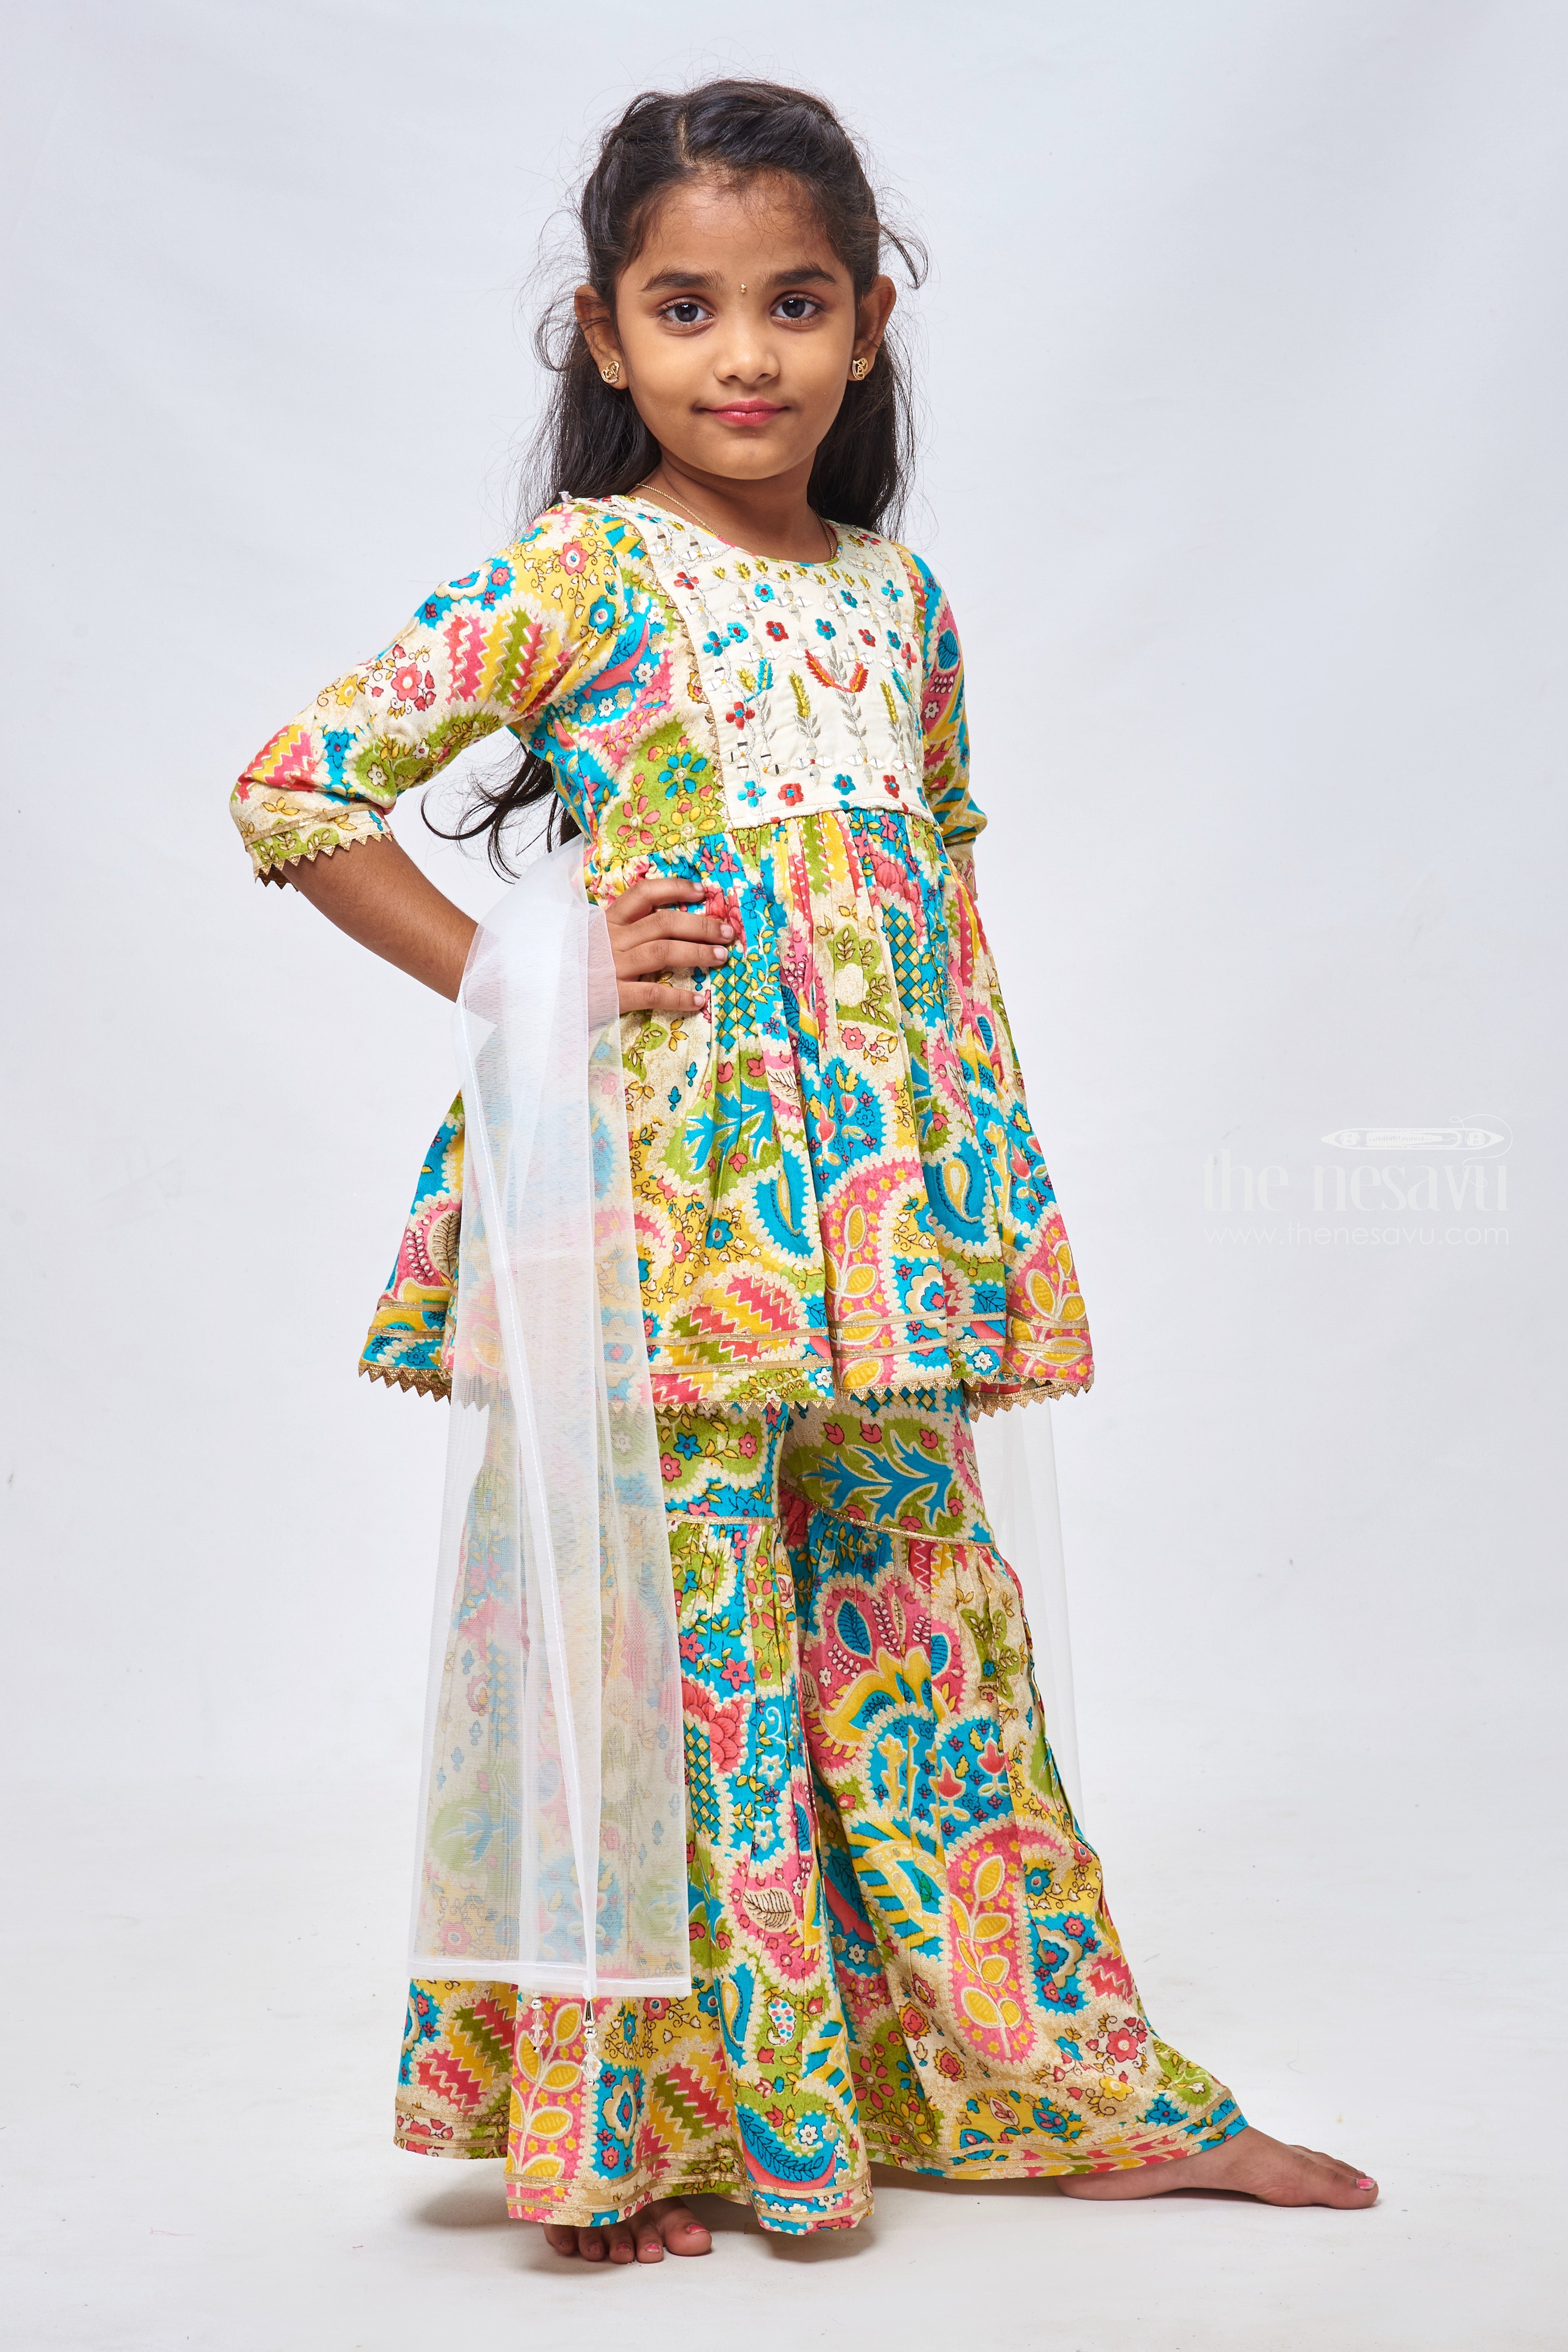 Gray Floral Cotton Kurtis Indian Handmade Stylish Kurtis For Girls & Woman  Dress | eBay